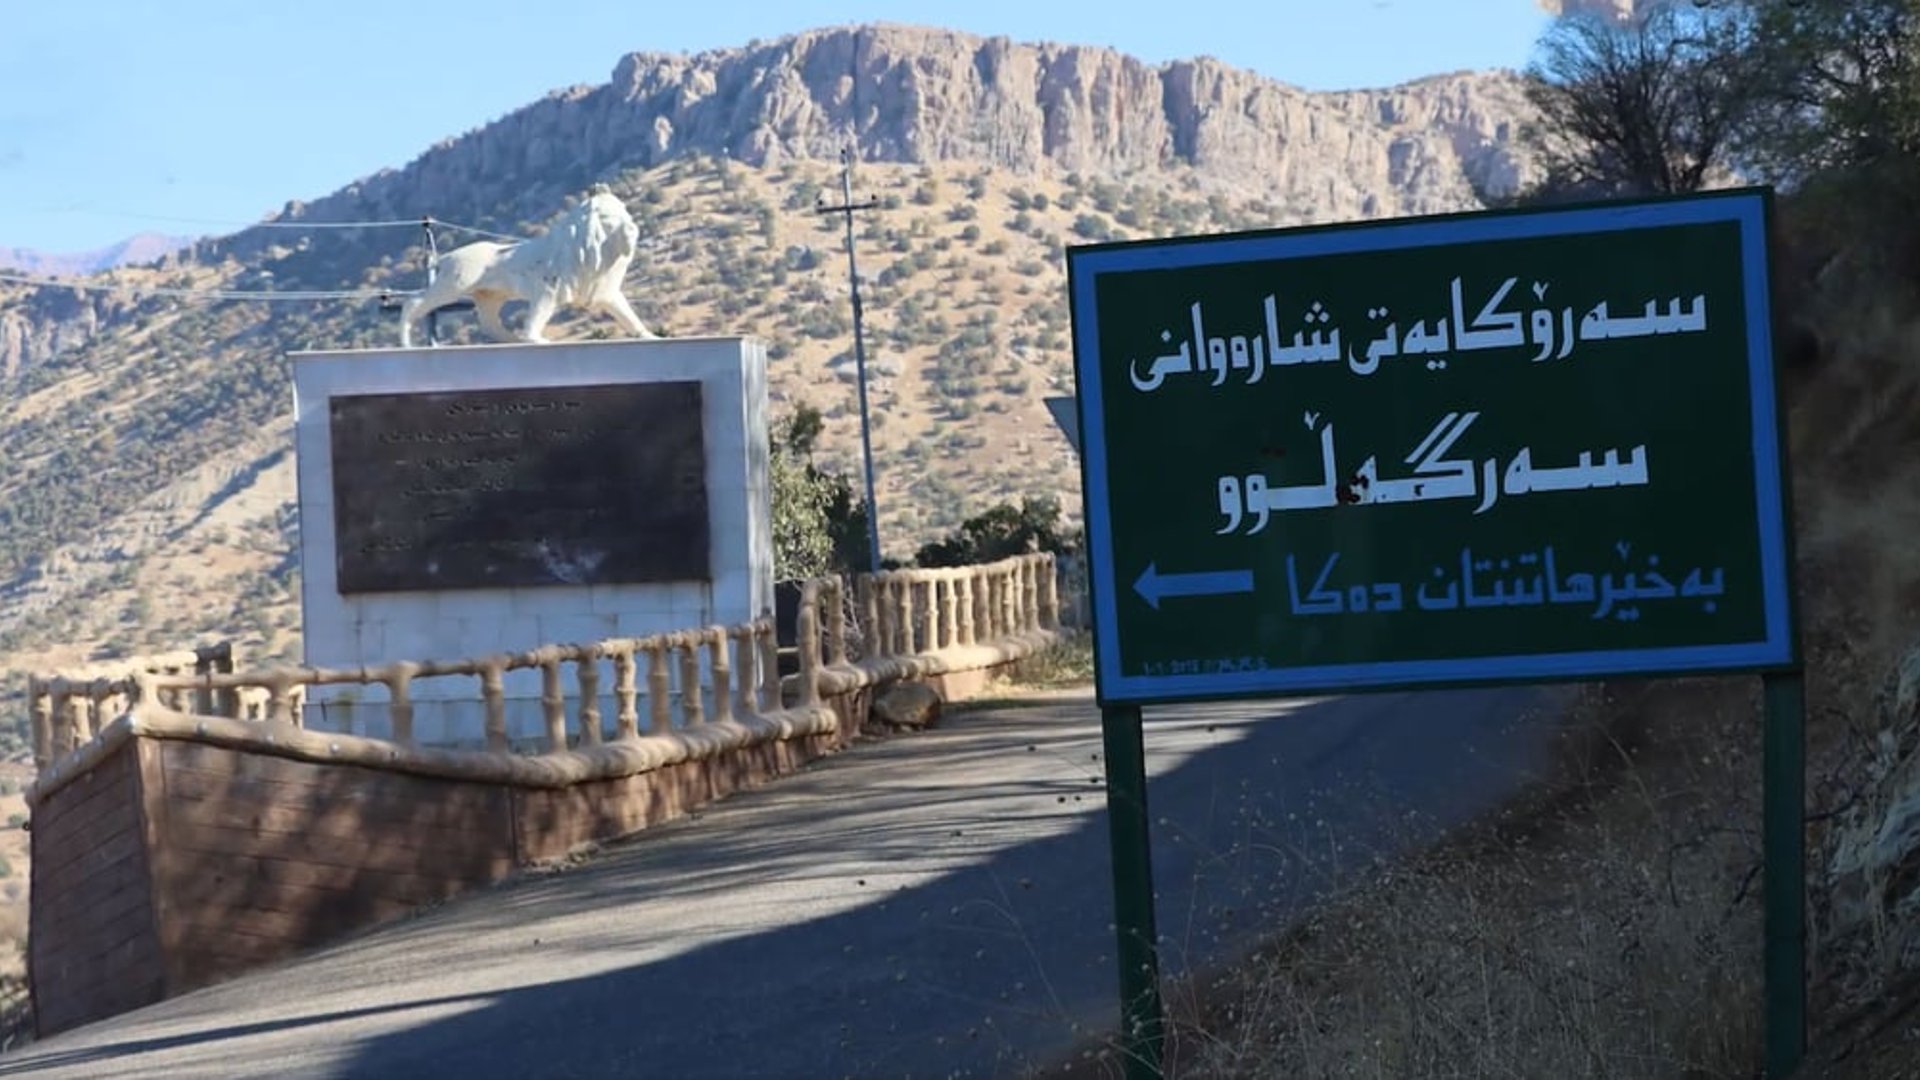 Sargalu village seeks  million dinars to fix sewage watercontaminated spring